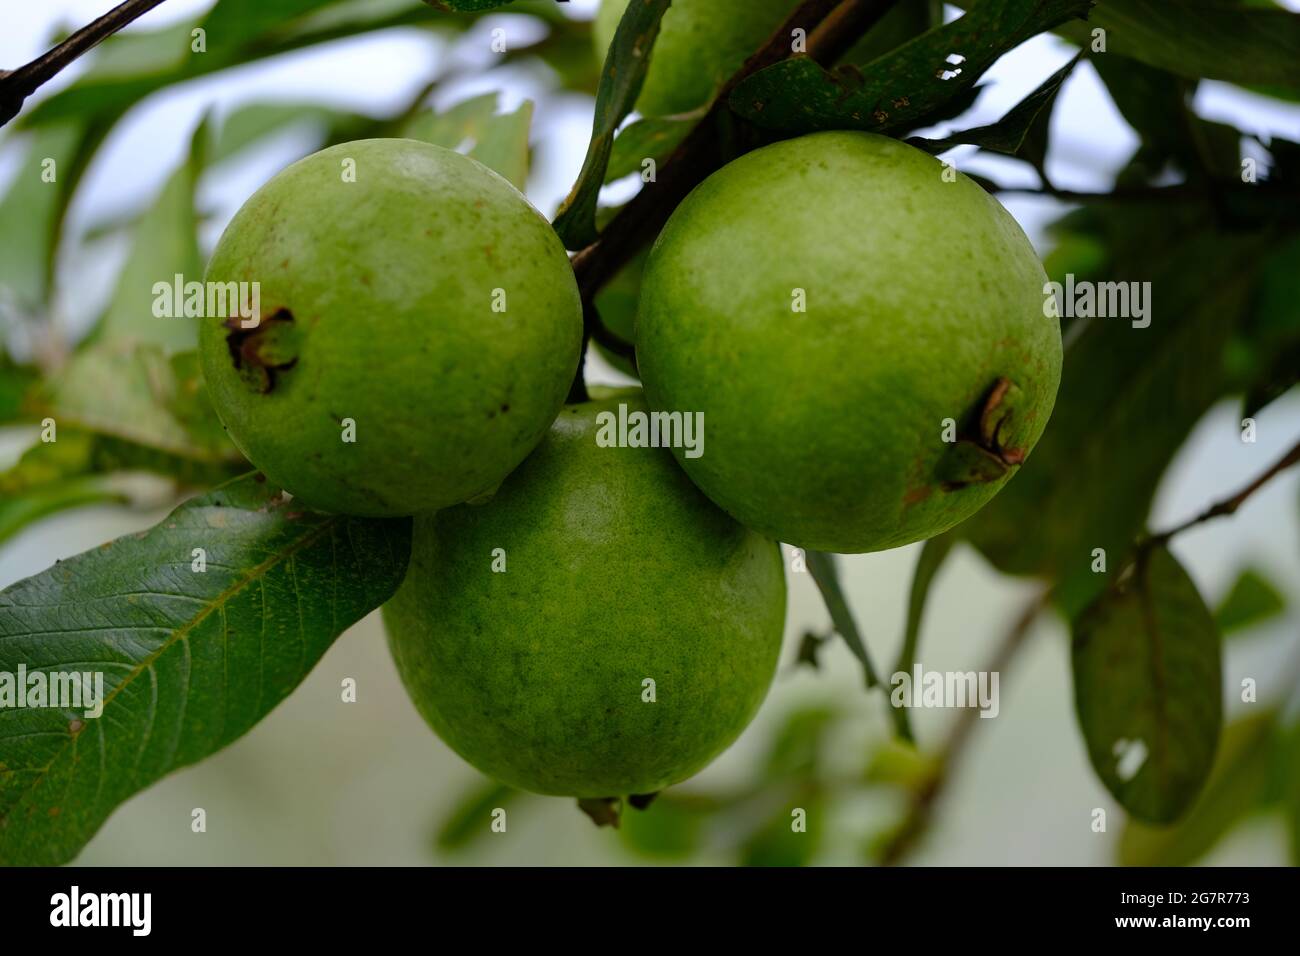 Indonesia Yogyakarta - Guava Fruit - Psidium guajava Stock Photo